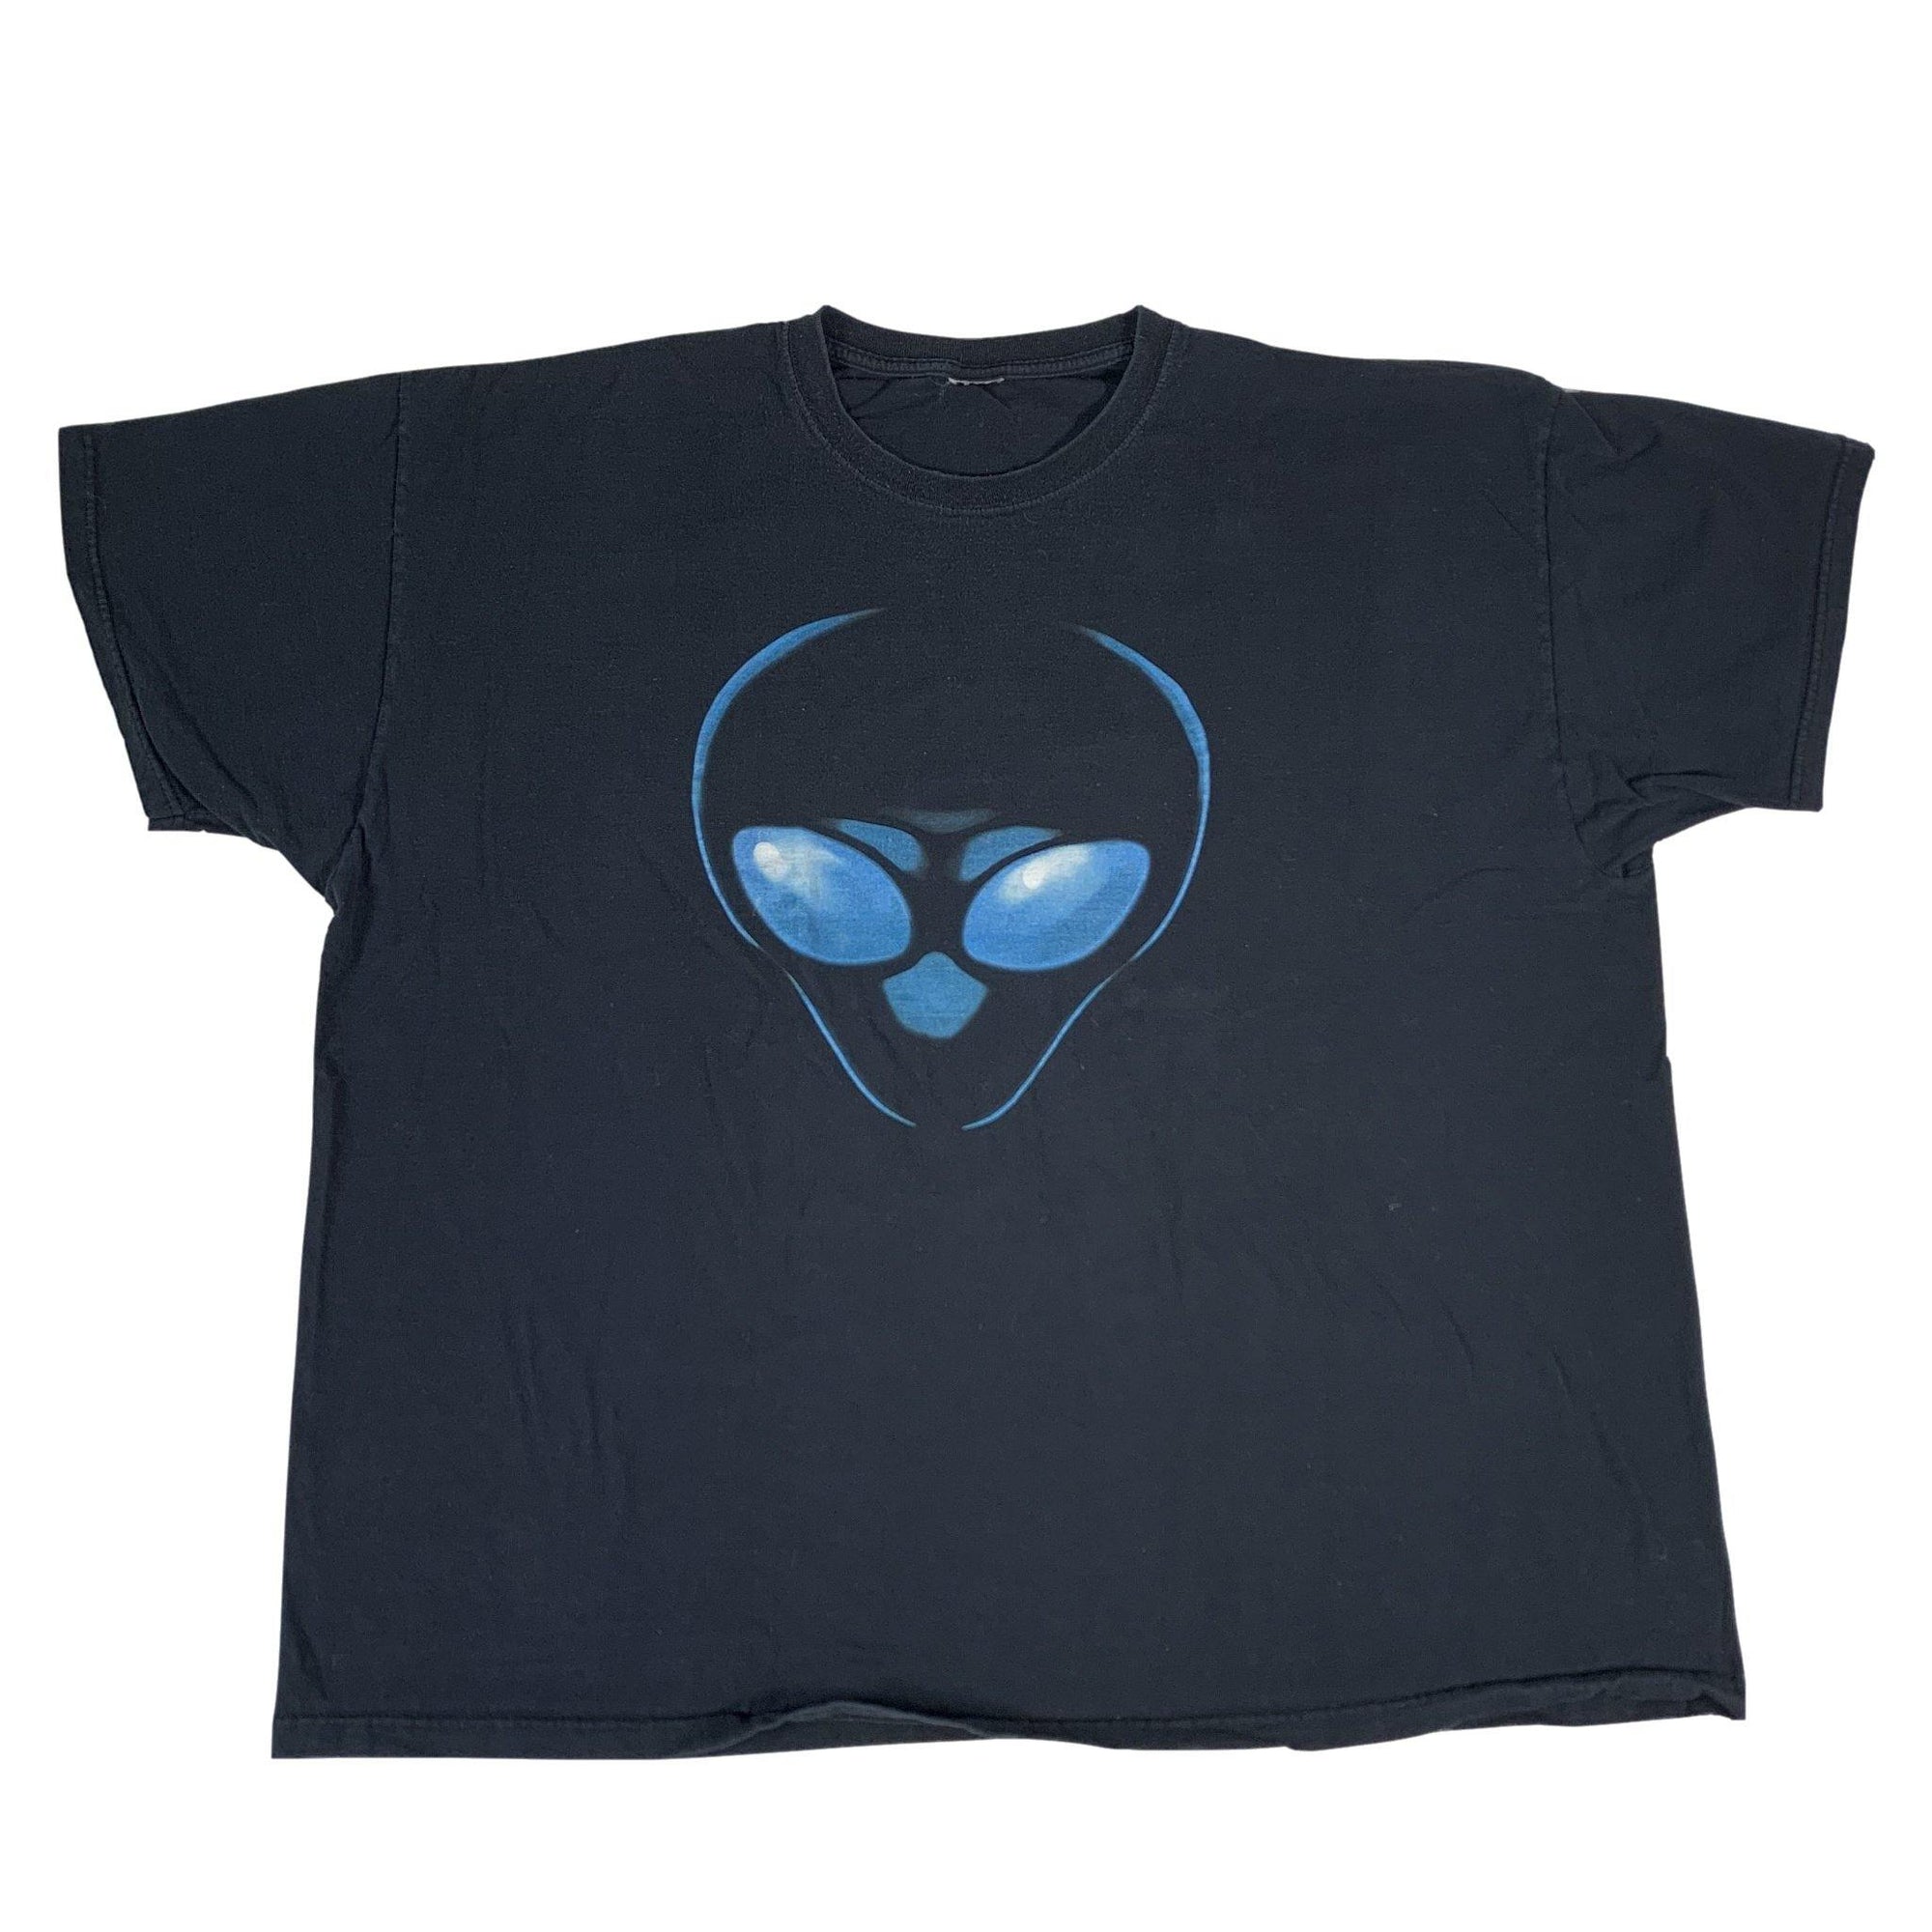 Vintage Original Alien Head T-Shirt